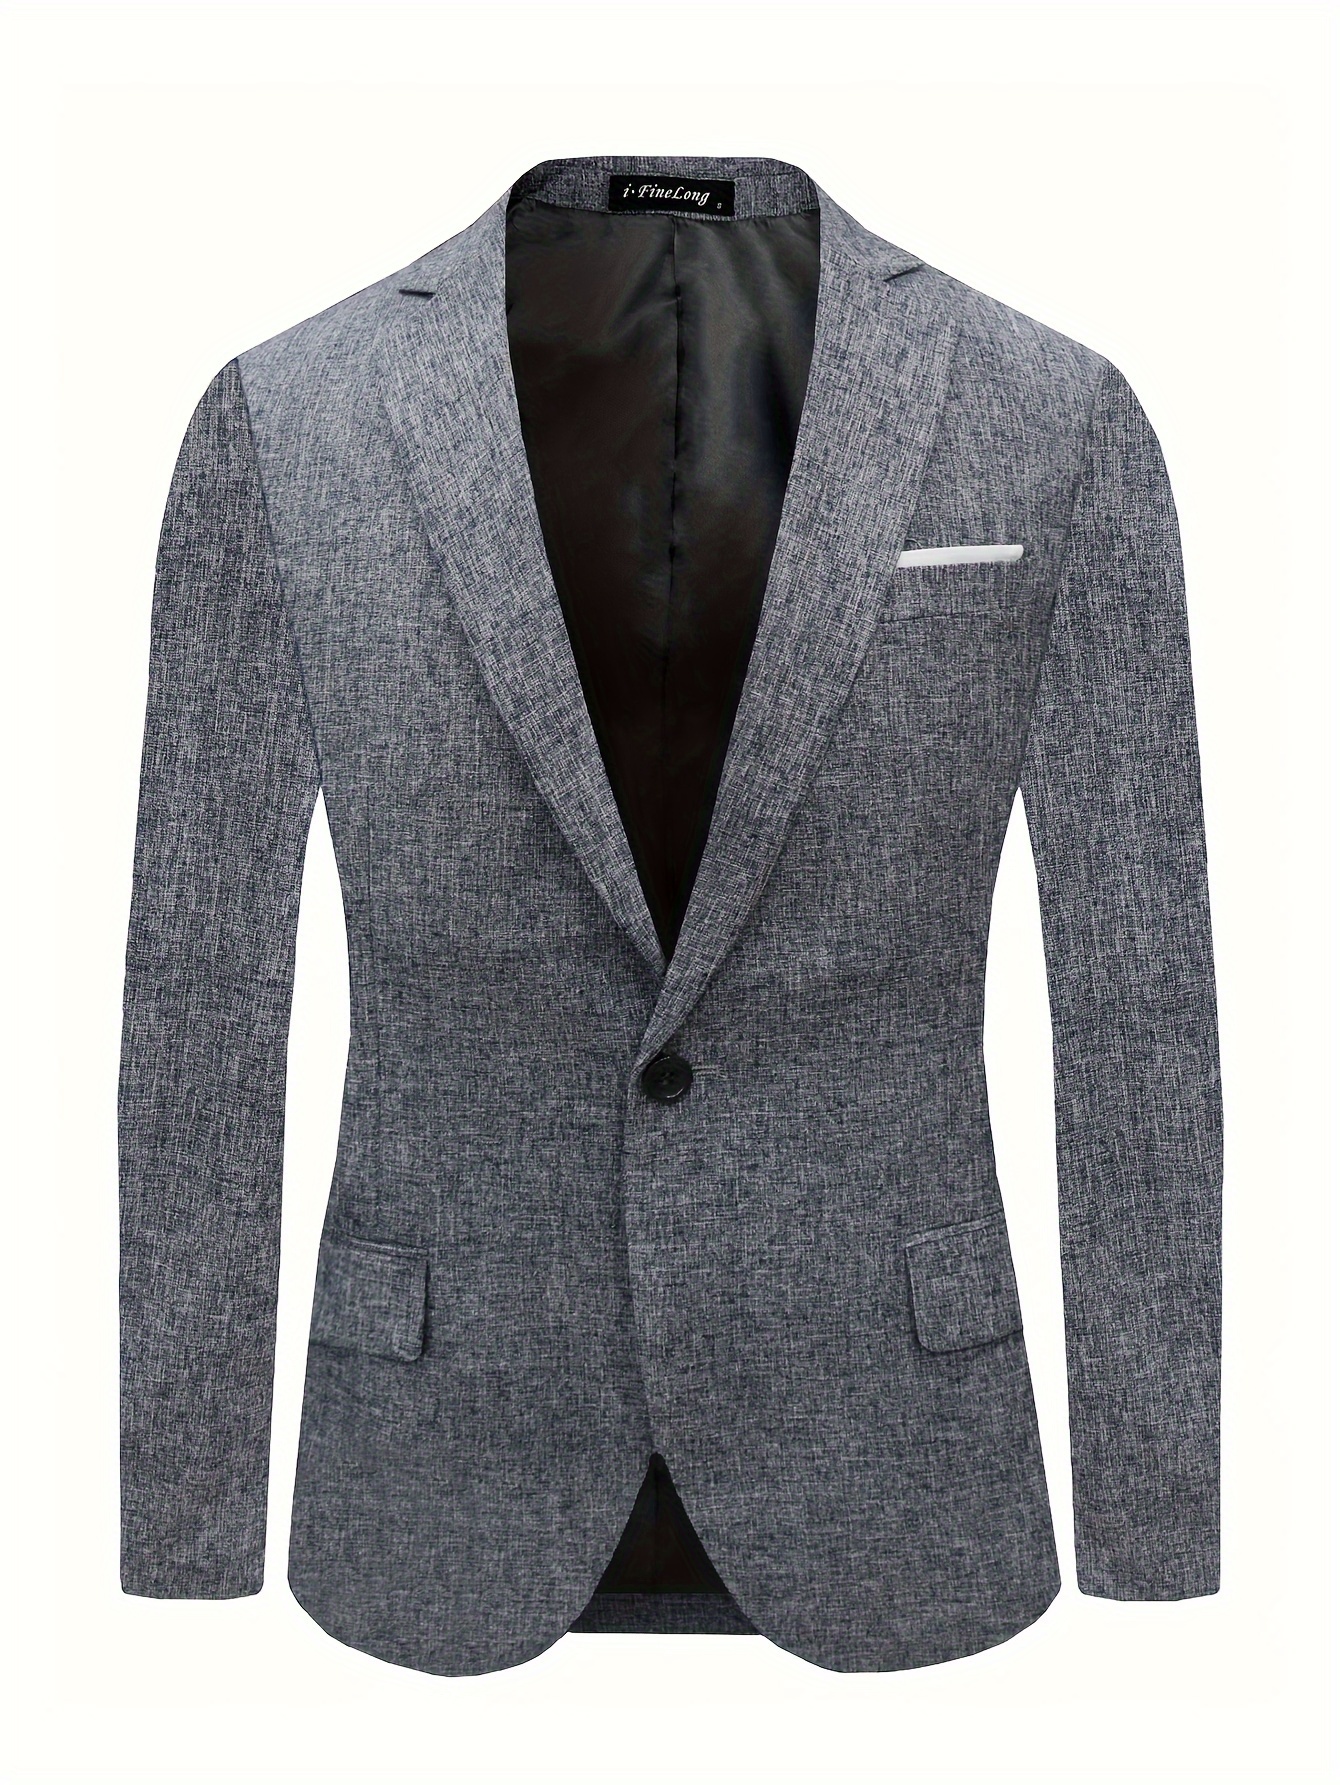 Buy Coats for Men  Tweed Coats, Party Wear Coat for Mens and